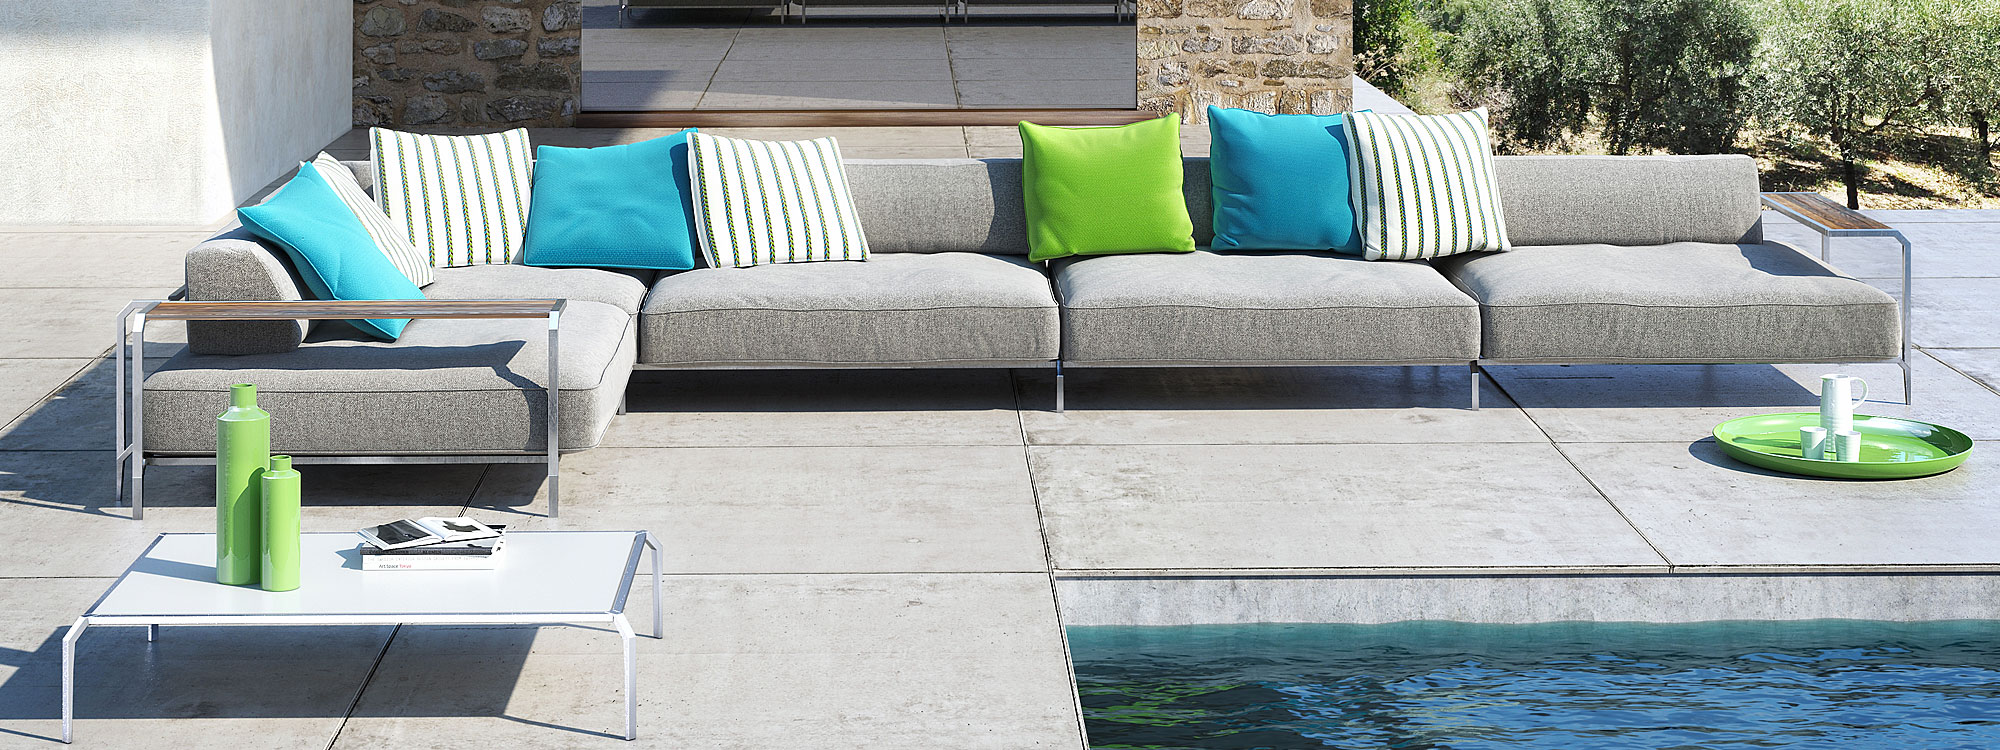 Image of Coro Sabal minimalist garden corner sofa on sunny poolside